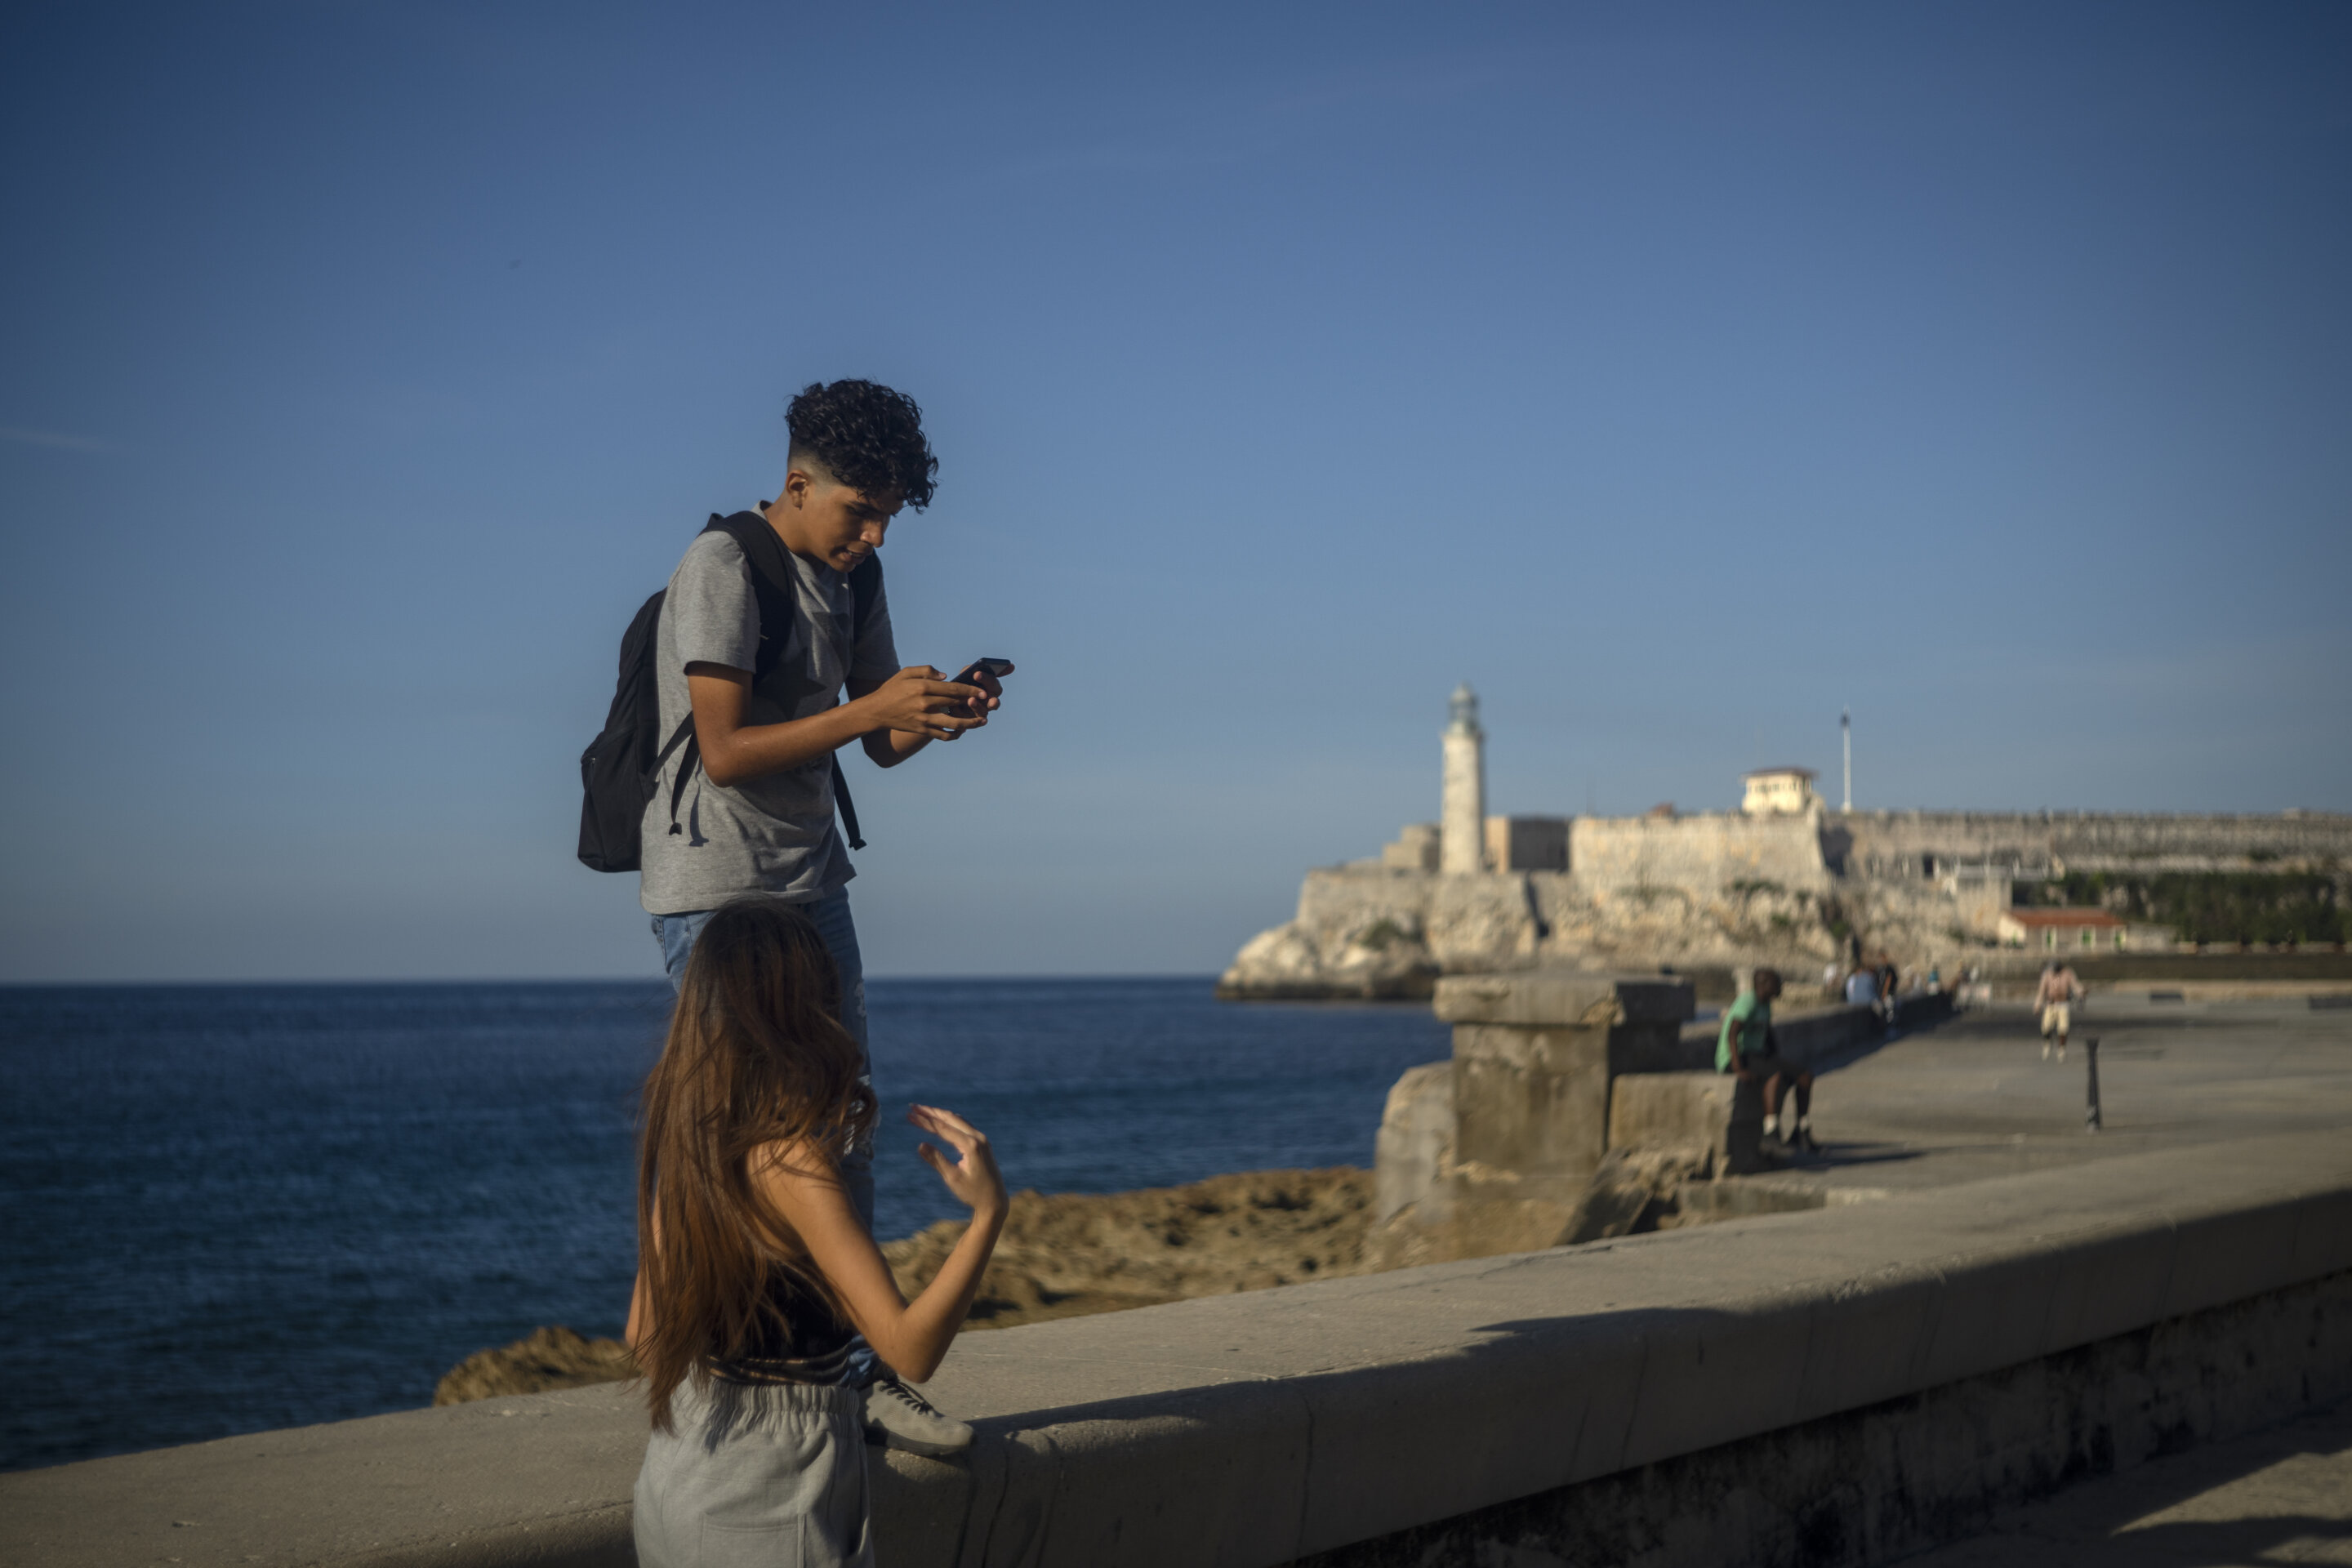 Cuba’s informal market finds new space on growing internet